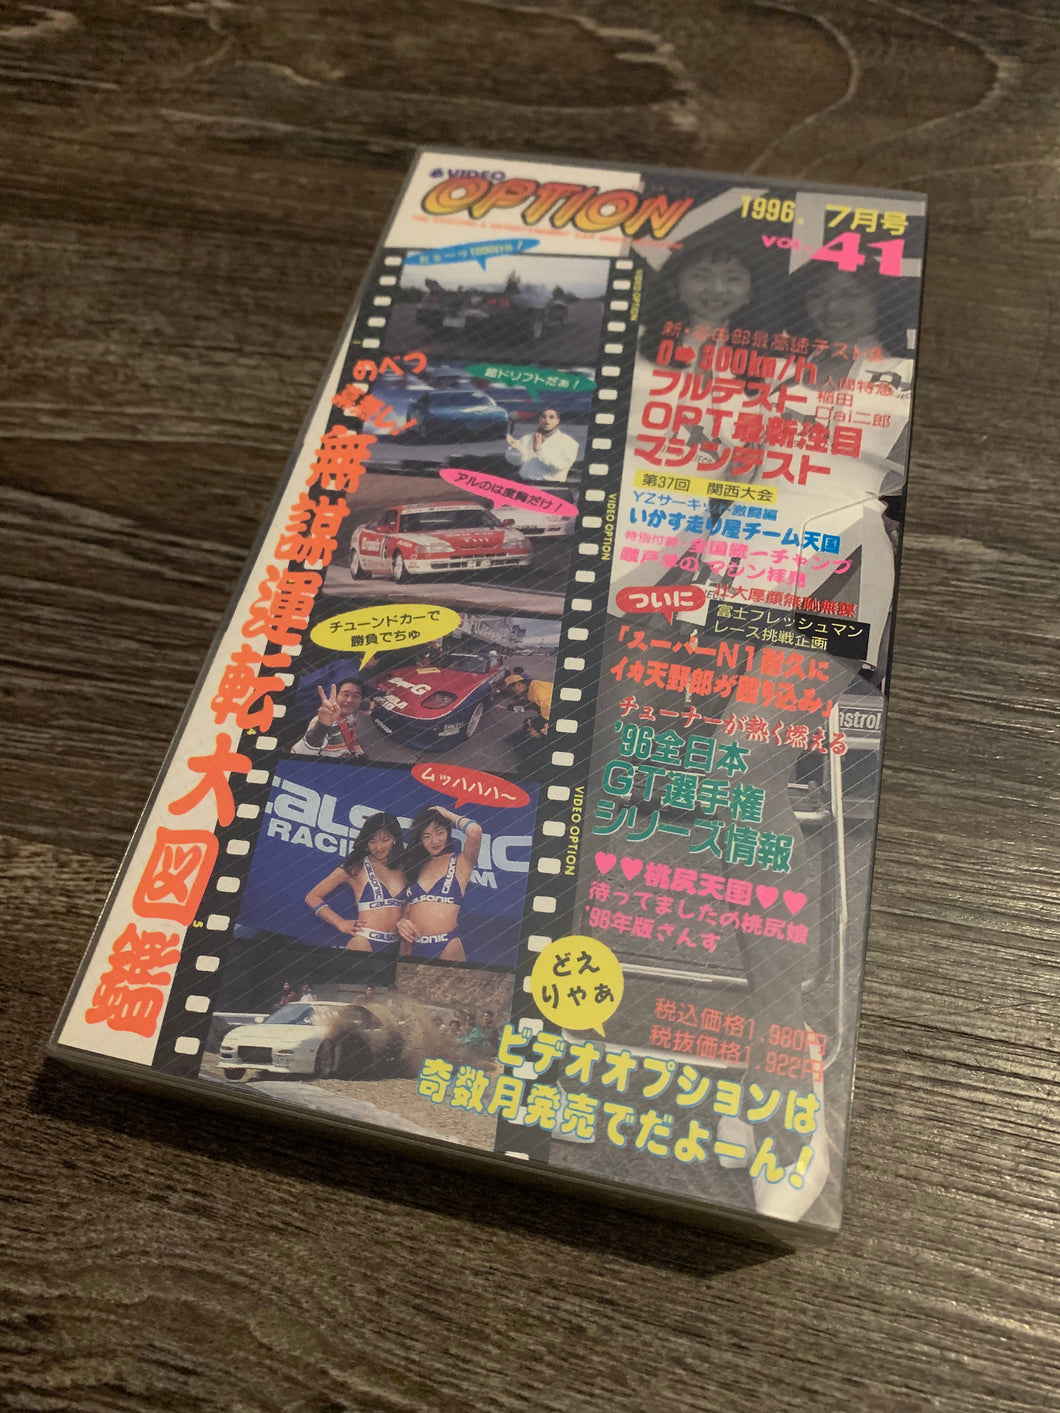 Option VHS Jul. 1996 Volume 41